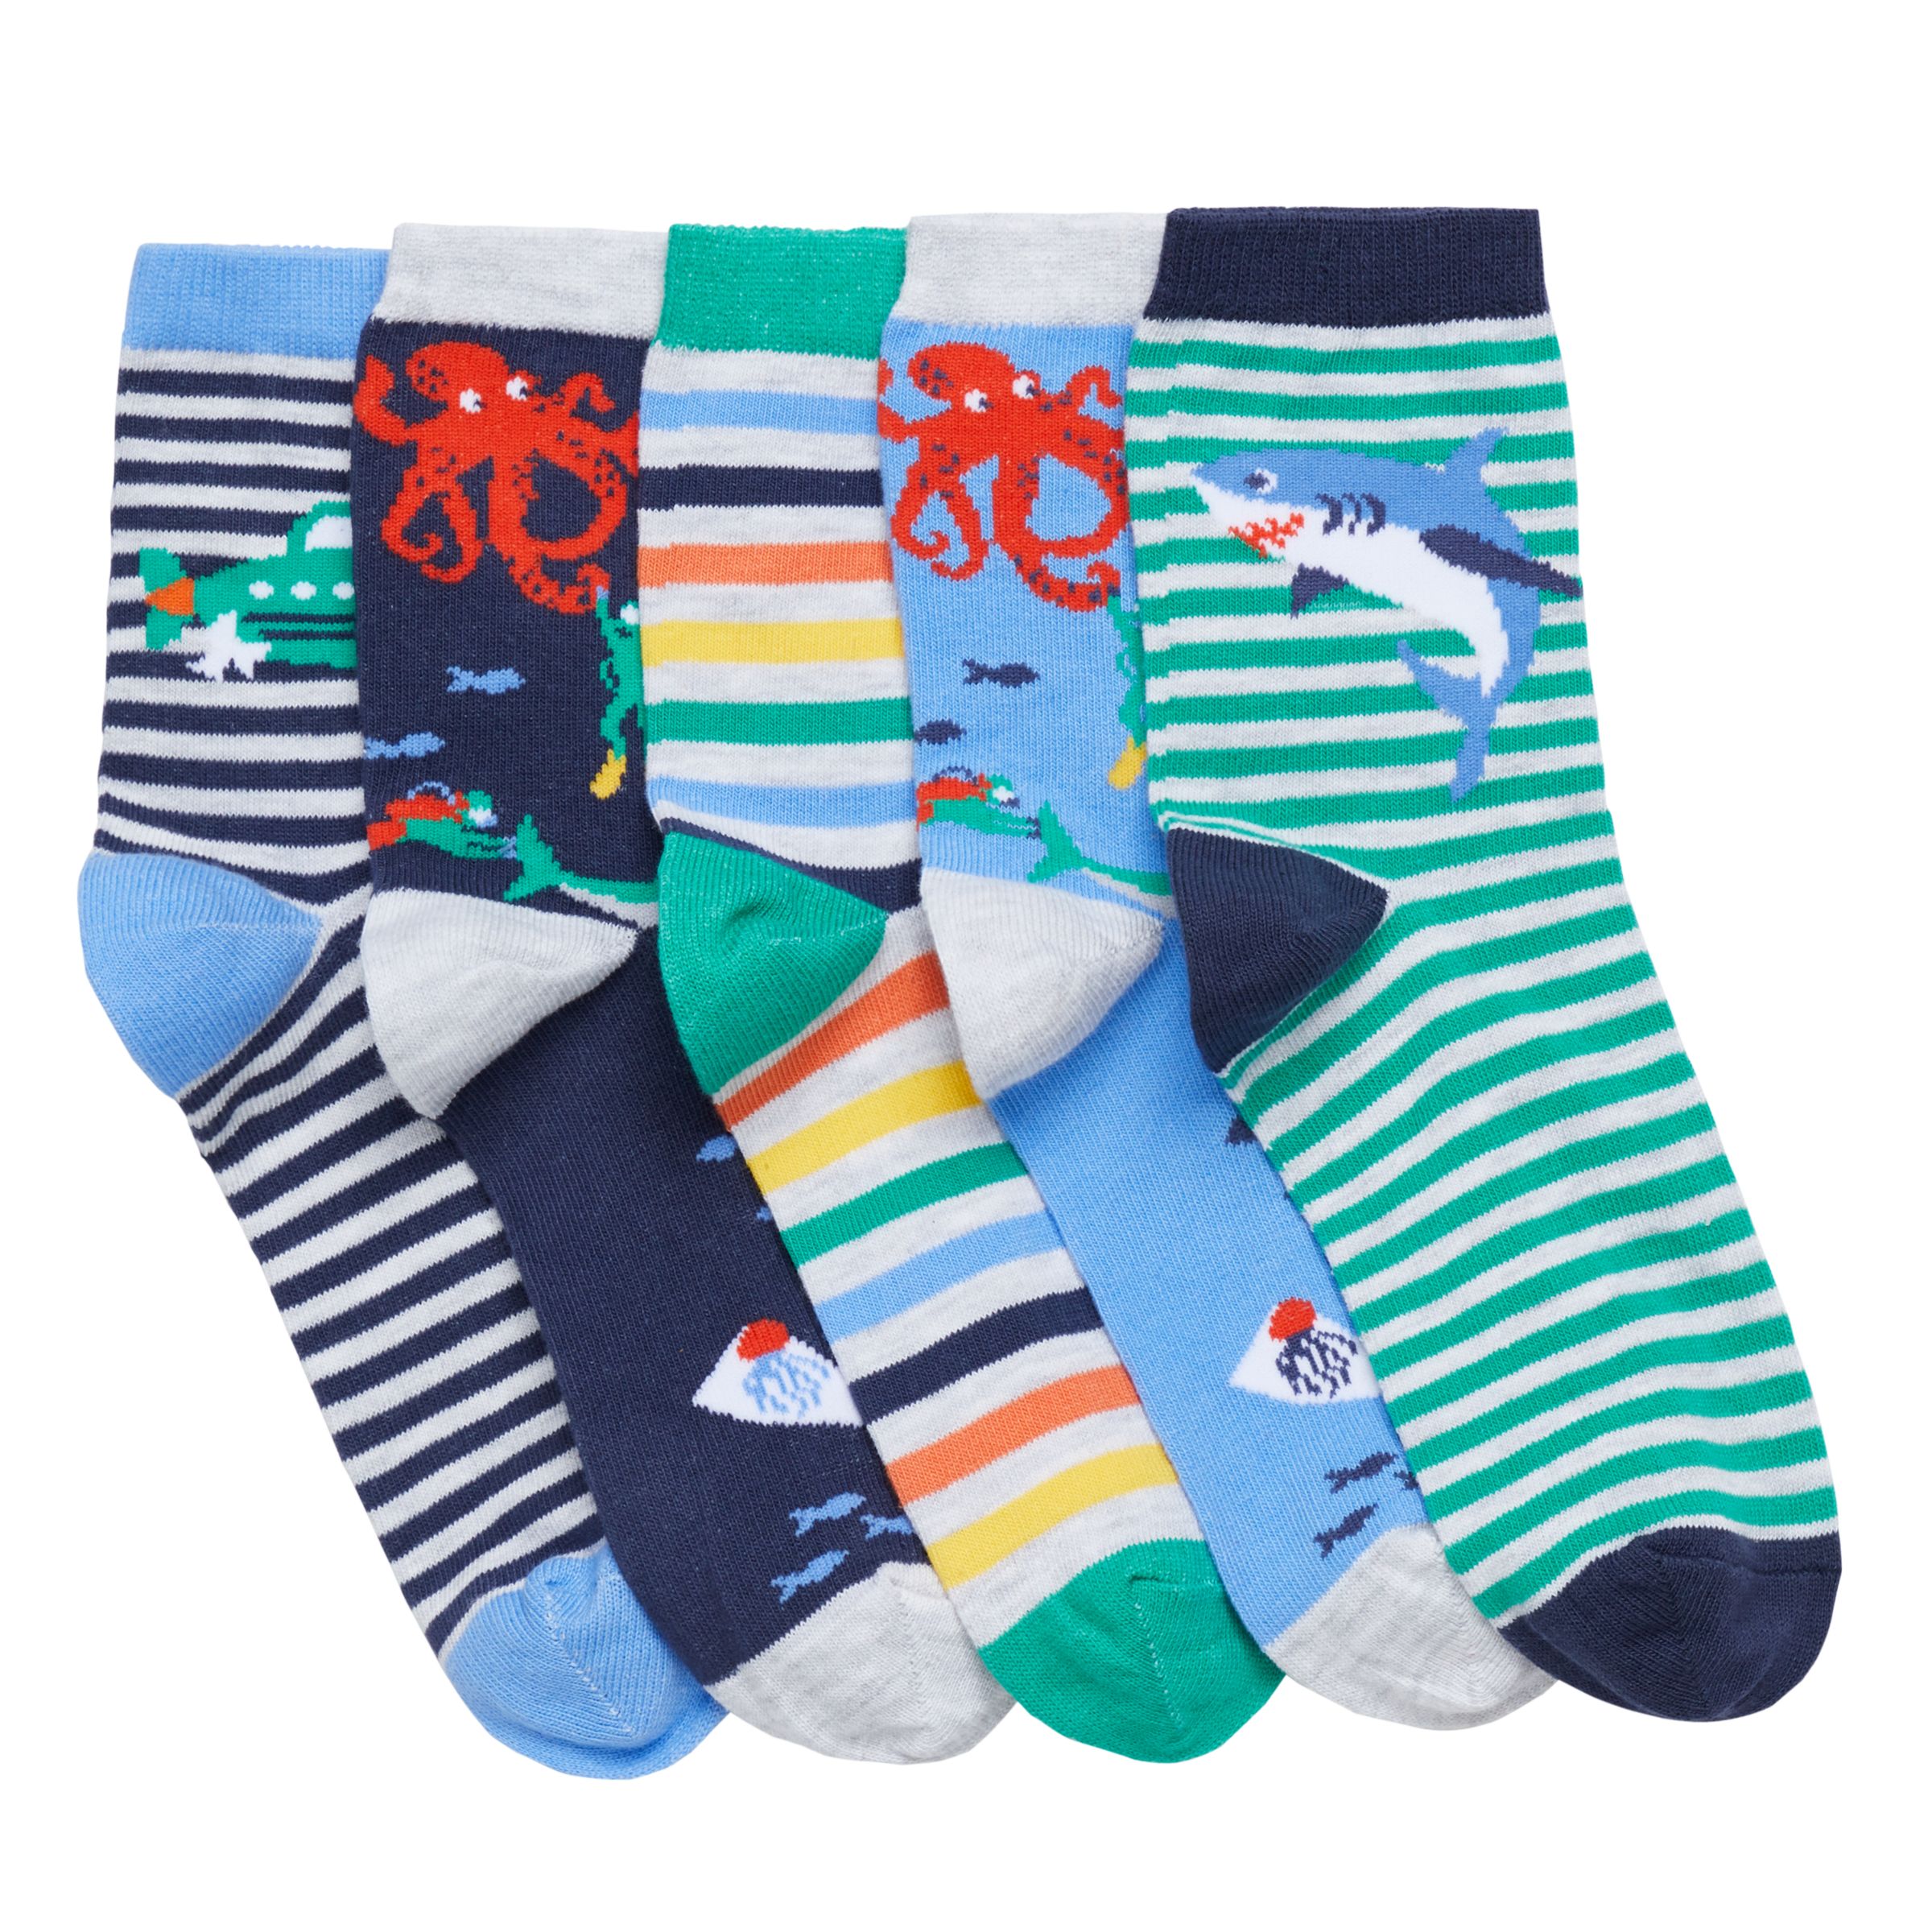 John Lewis & Partners Boys' Deep Sea Diver Socks, Pack of 5, Multi